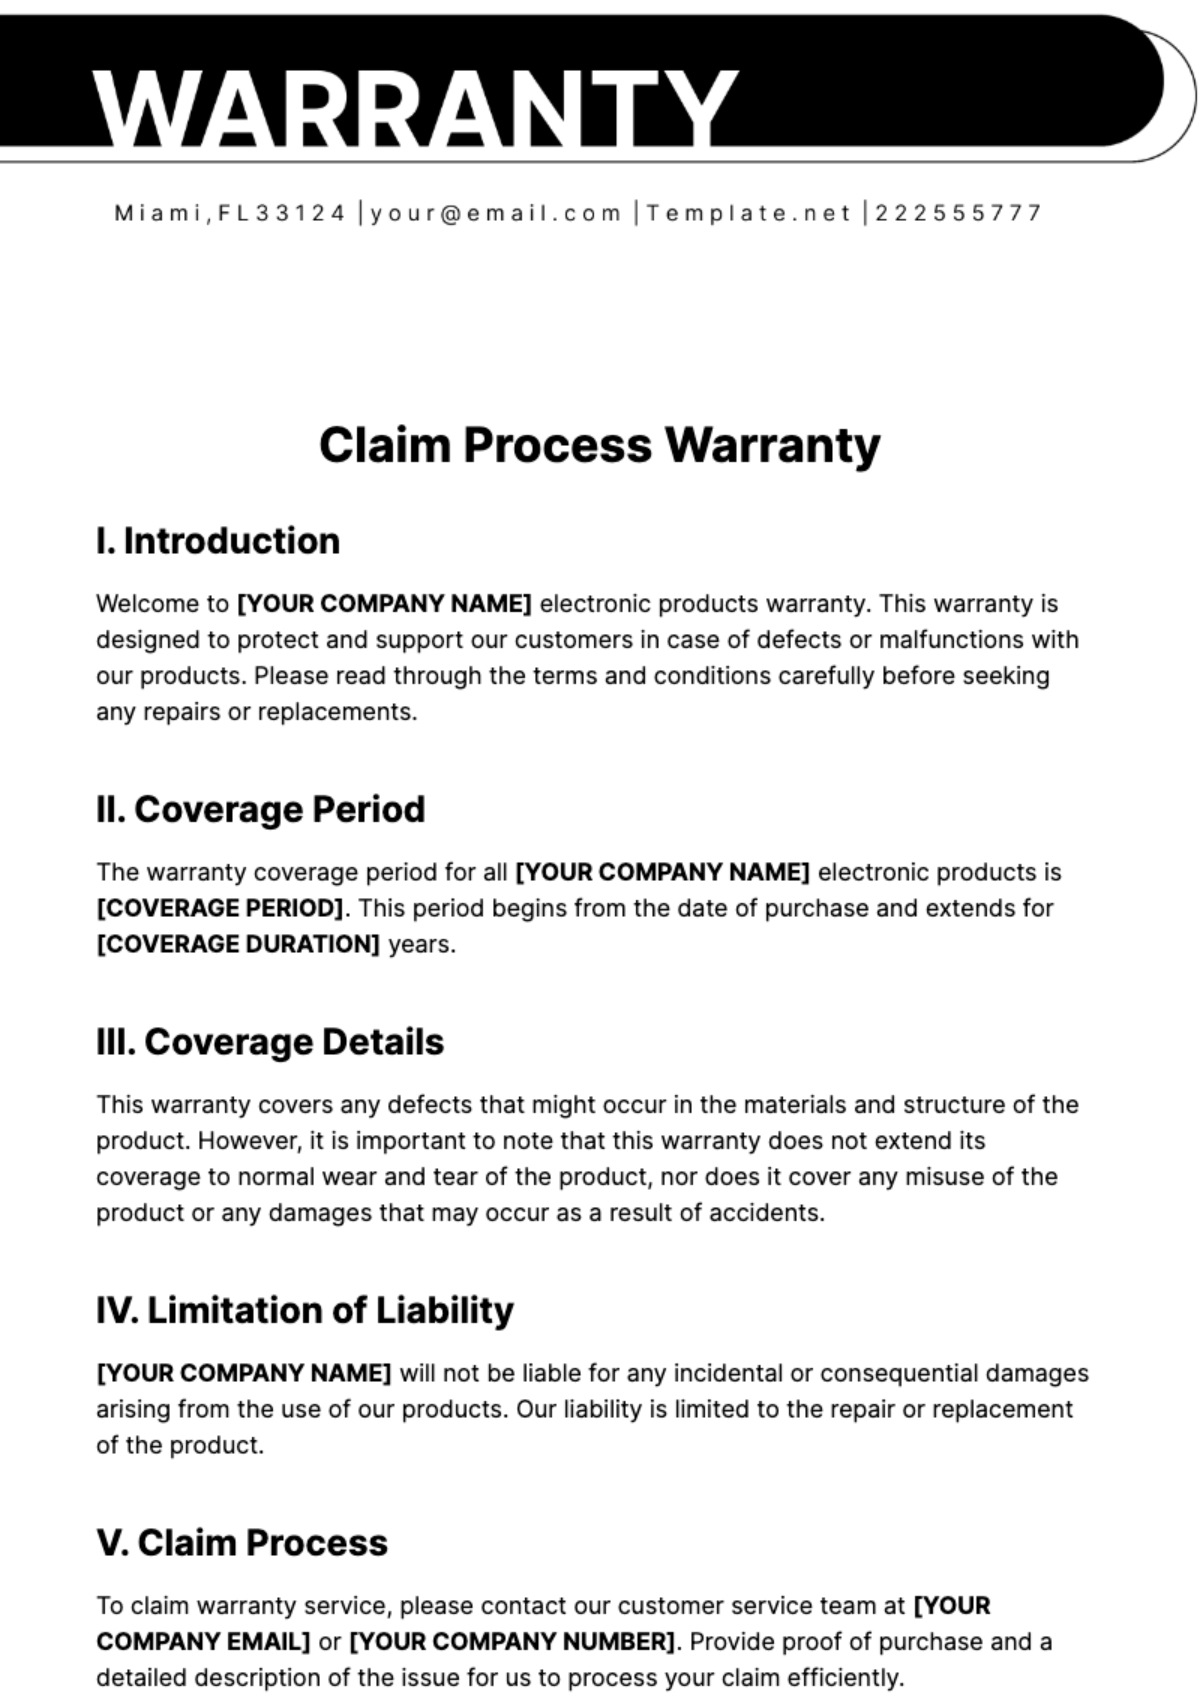 Claim Process Warranty Template